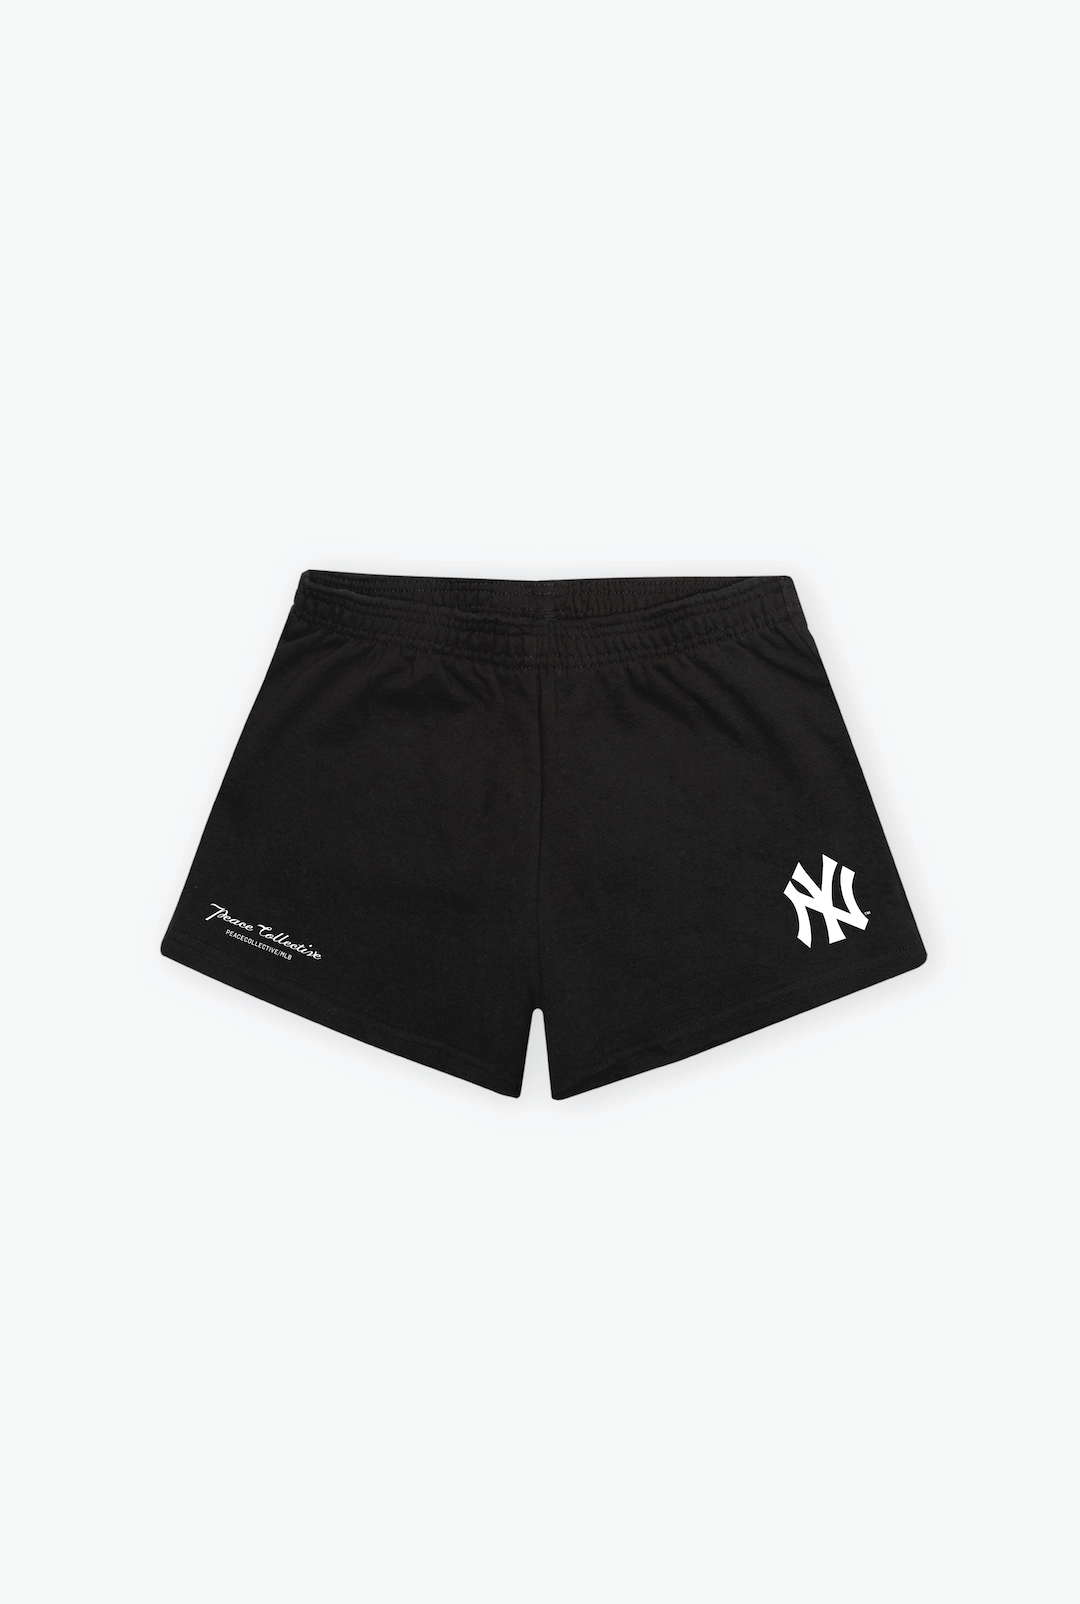 New York Yankees Women's Fleece Shorts - Black